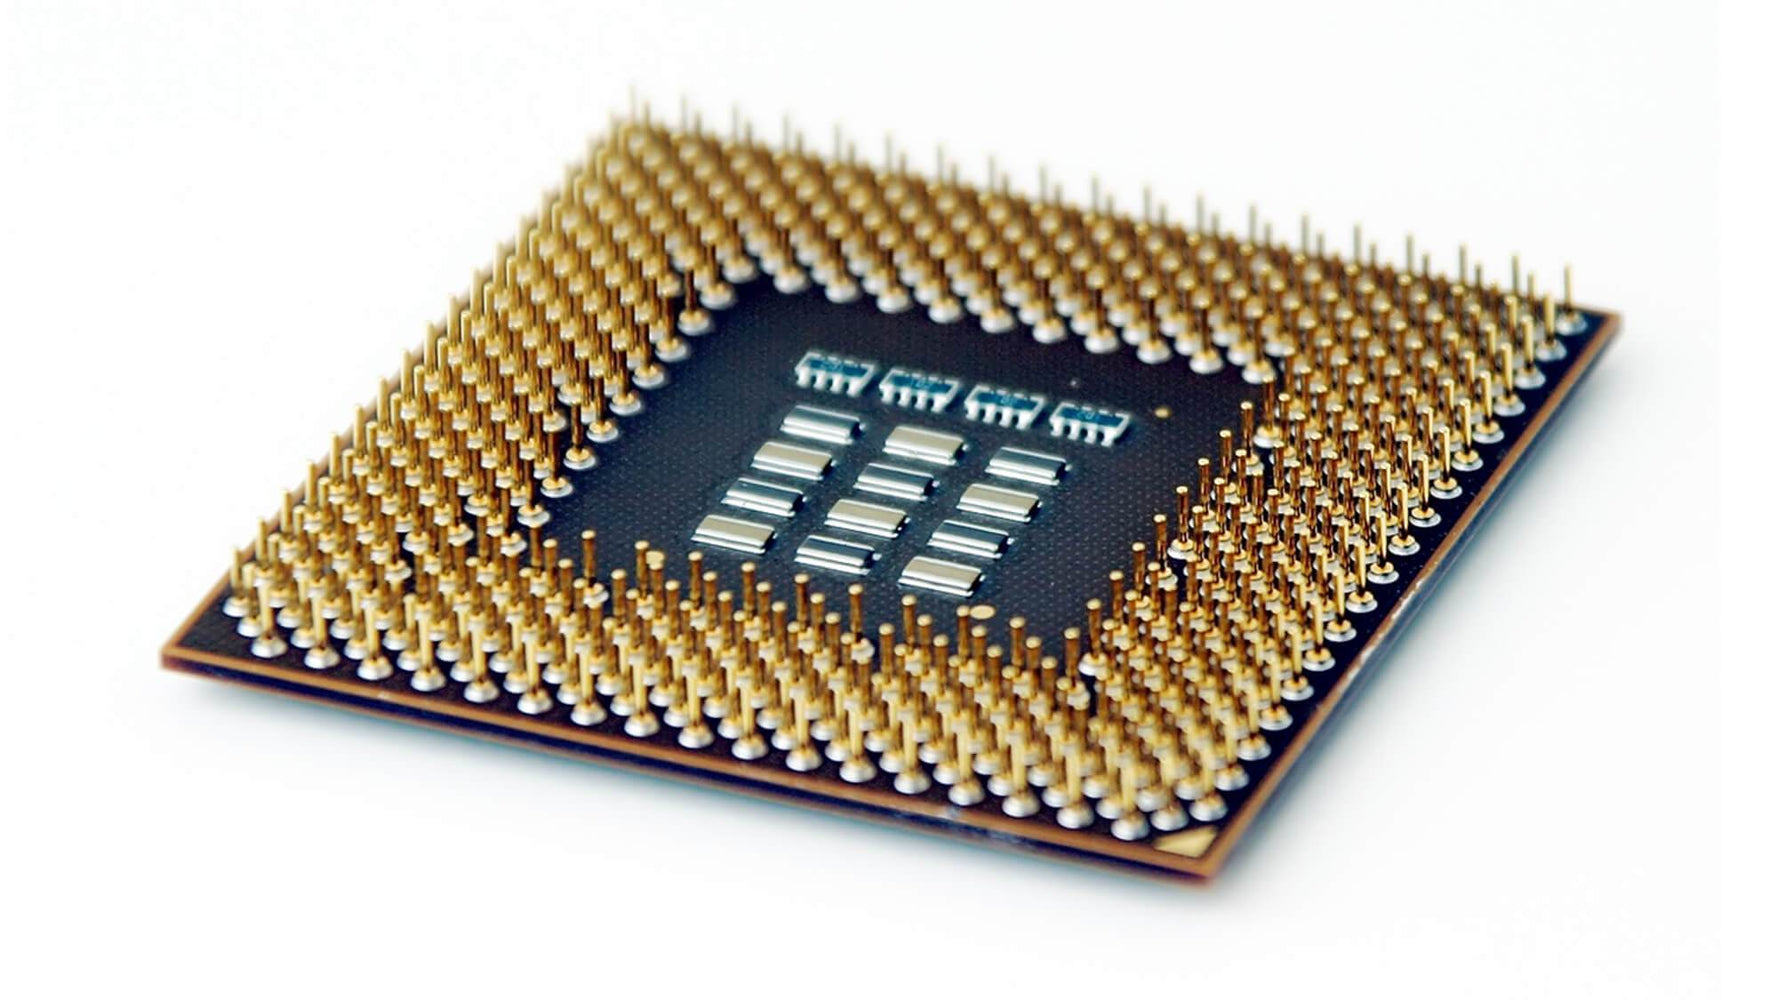 X9GTD - Dell Intel Xeon E5645 6 Core 2.4GHz 1.5MB L2 Cache 12MB L3 Cache 5.86GT/S QPI Speed Socket FCLGA1366 32NM 80W Processor